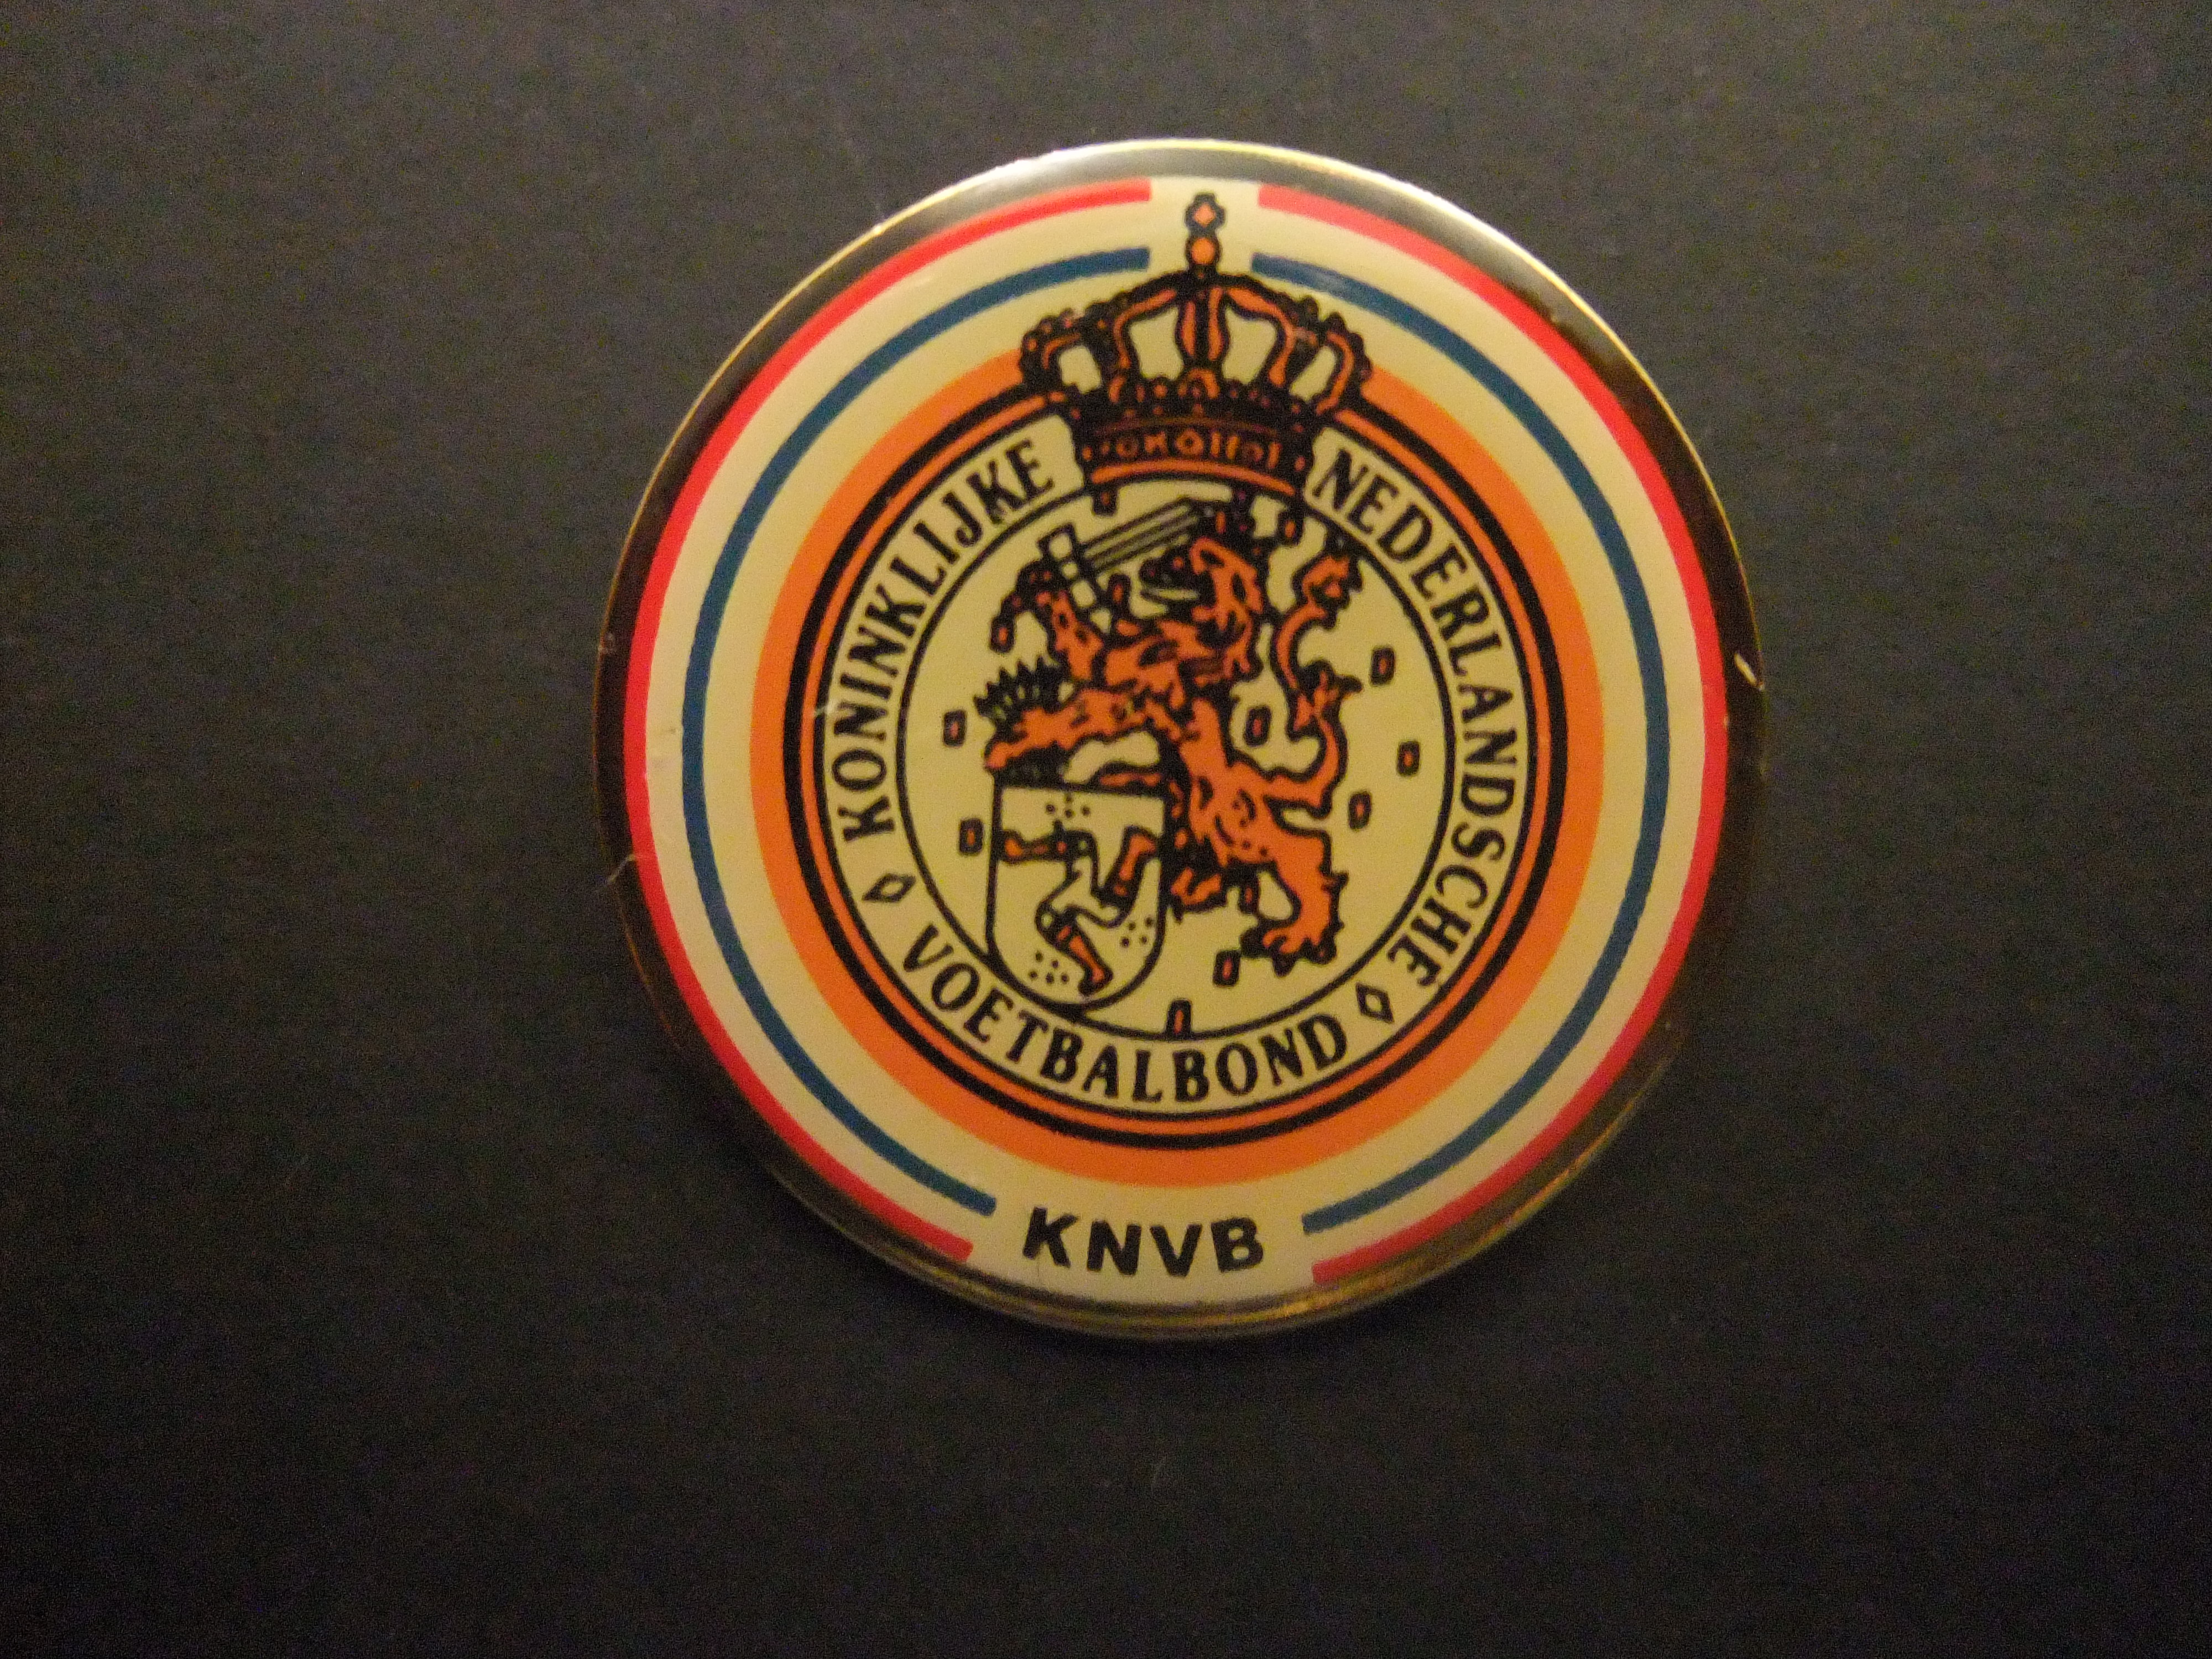 KNVB (Koninklijke Nederlandse Voetbalbond) logo